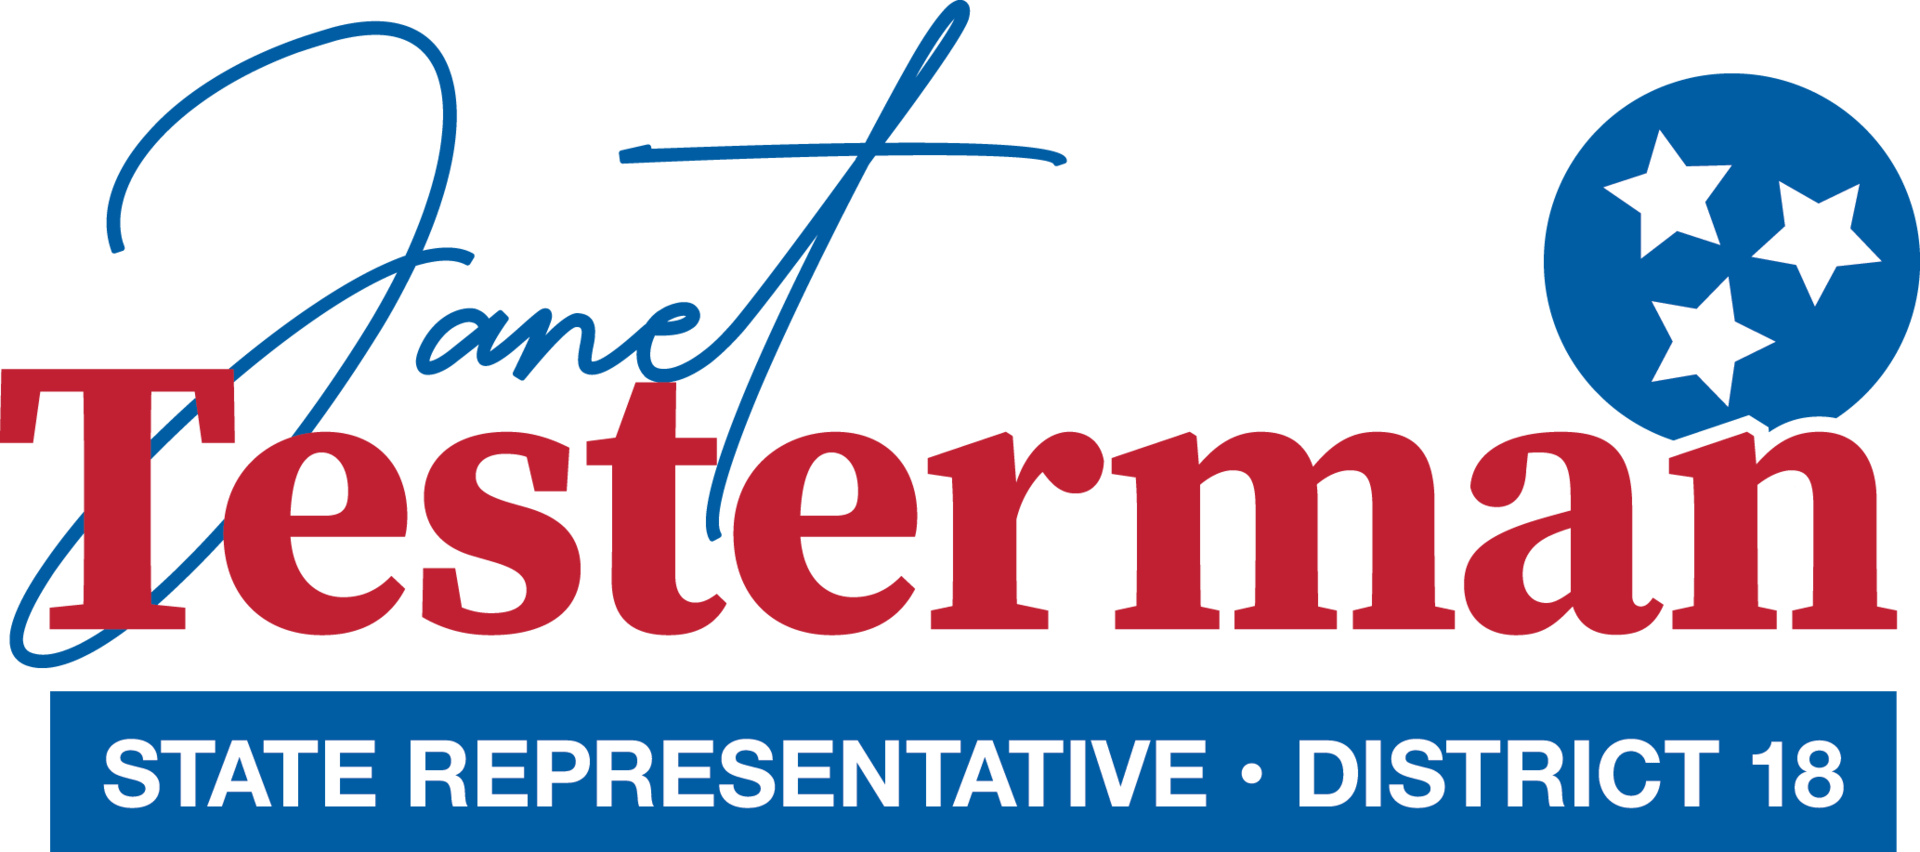 Testerman campaign logo   state rep 4c